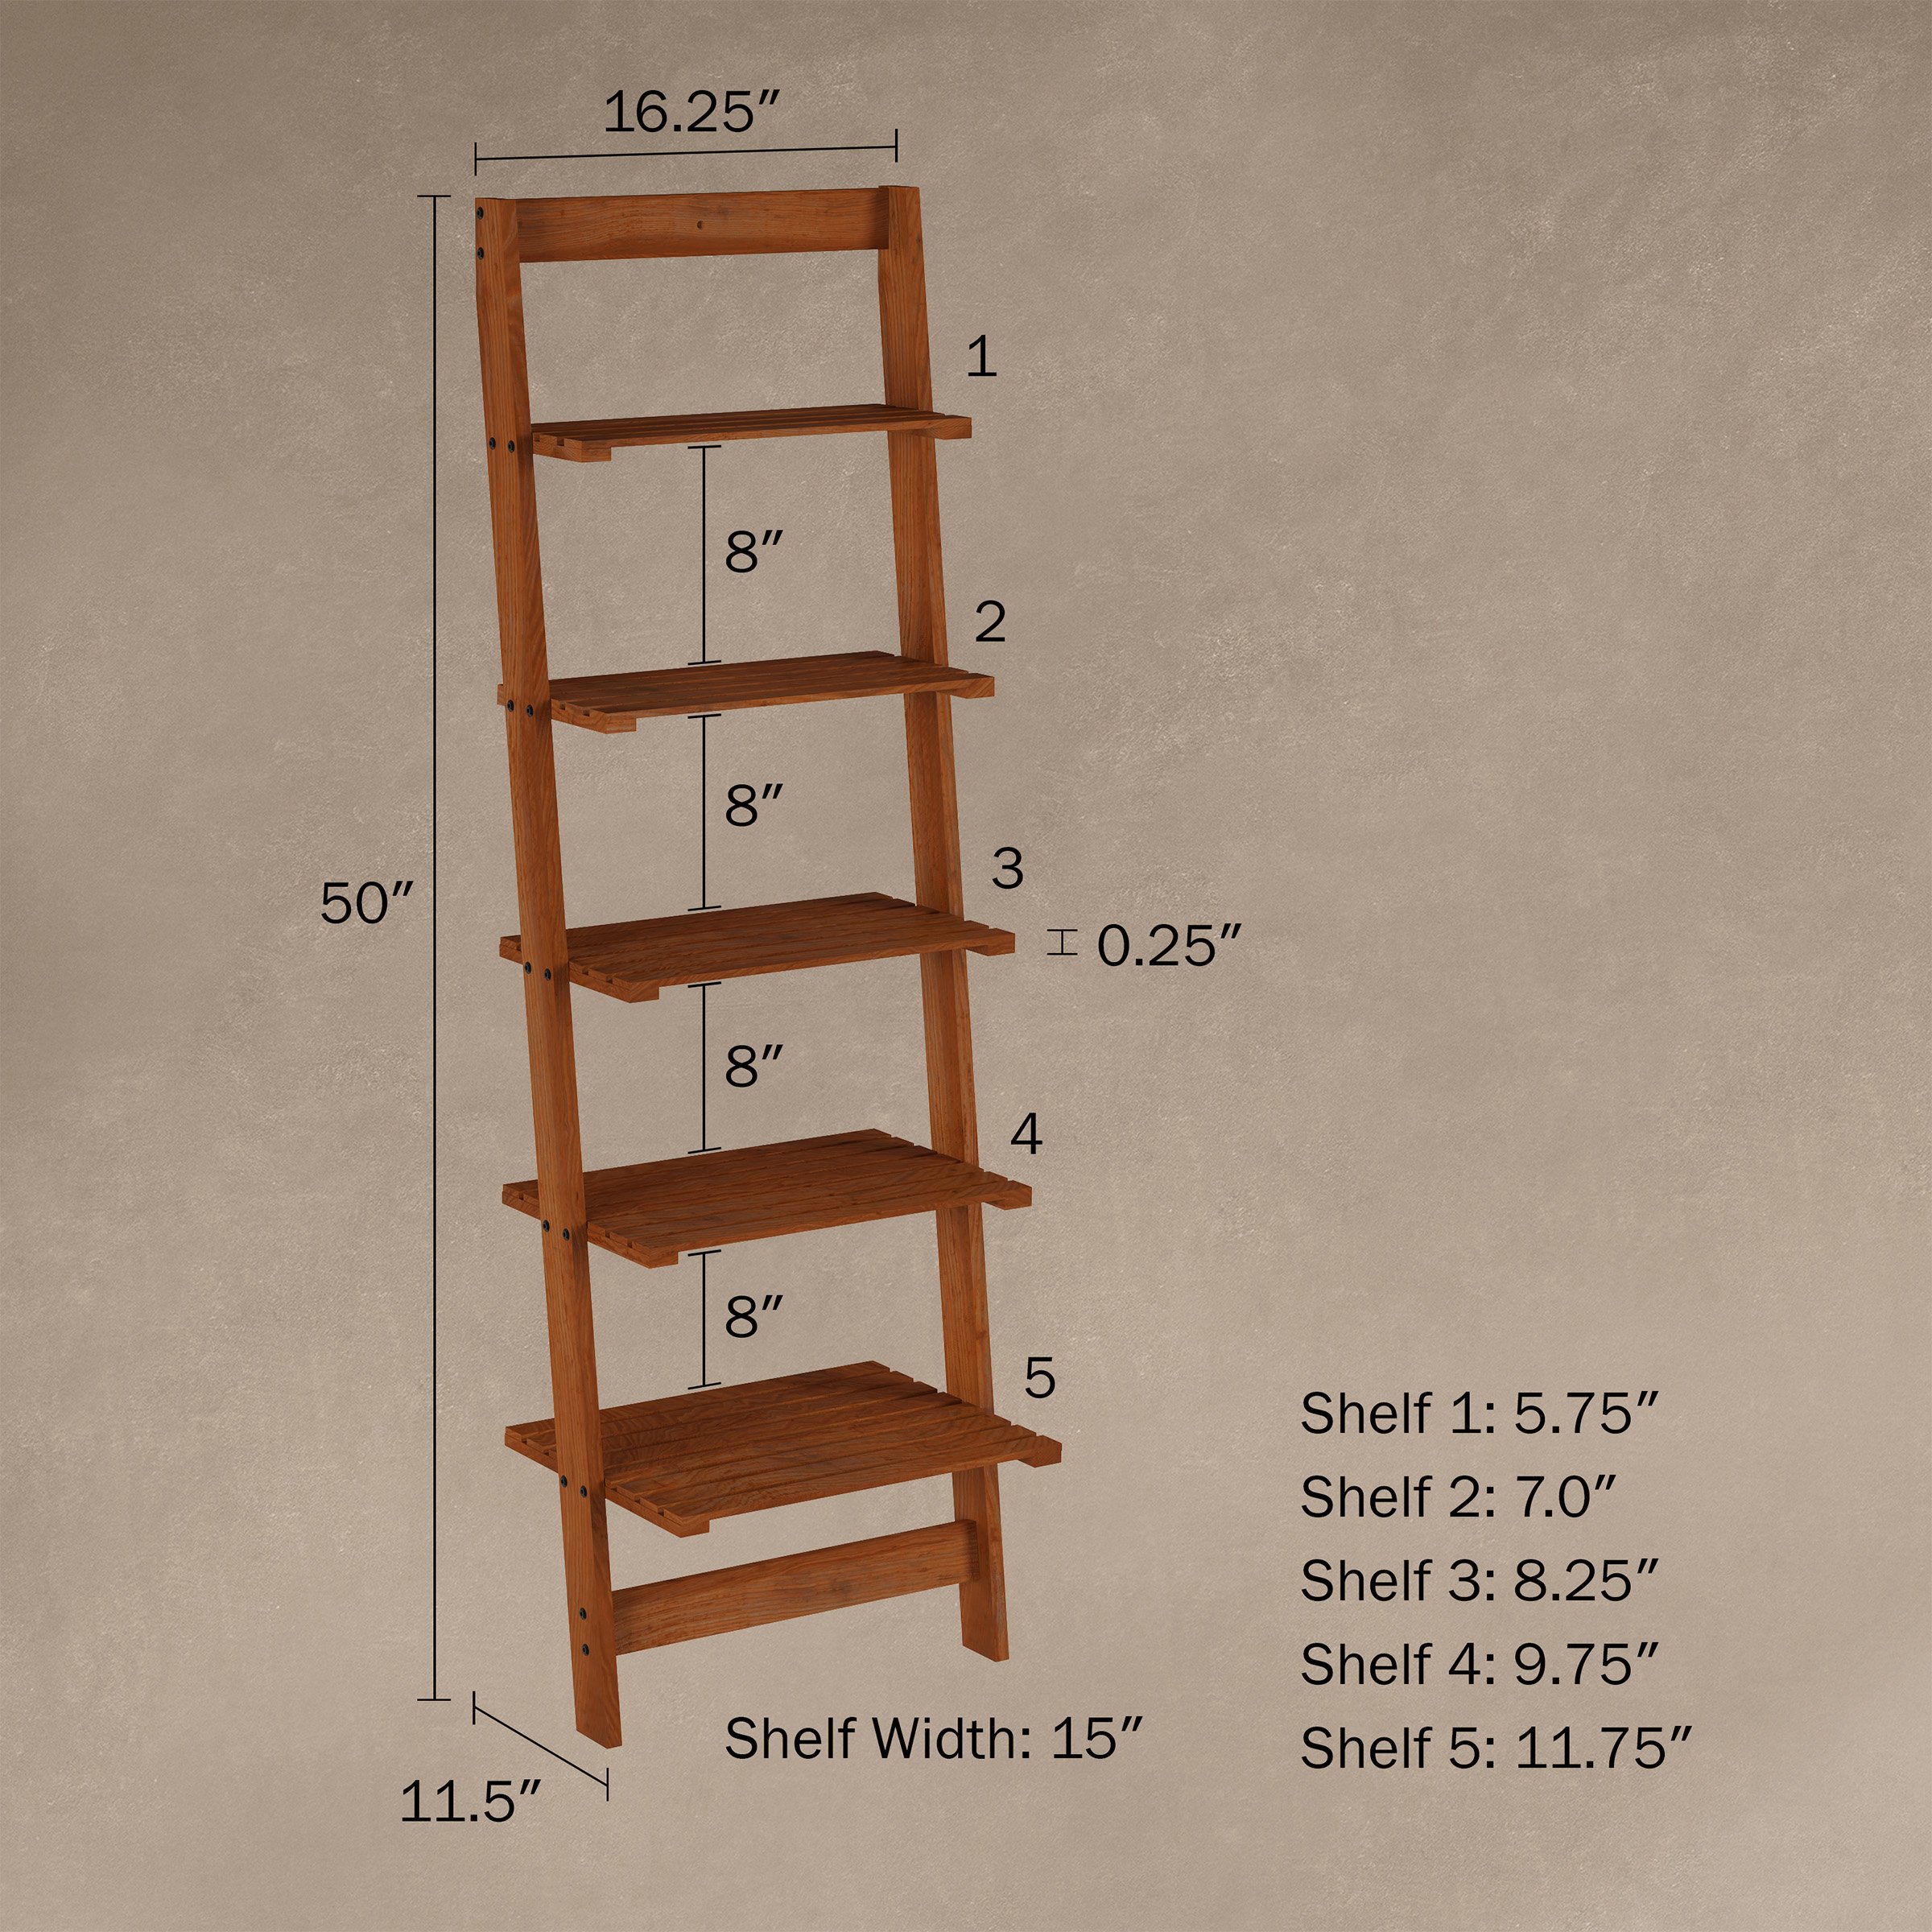 Five Shelf Ladder Style Wooden Storage Bookshelf Display Cherry Finish